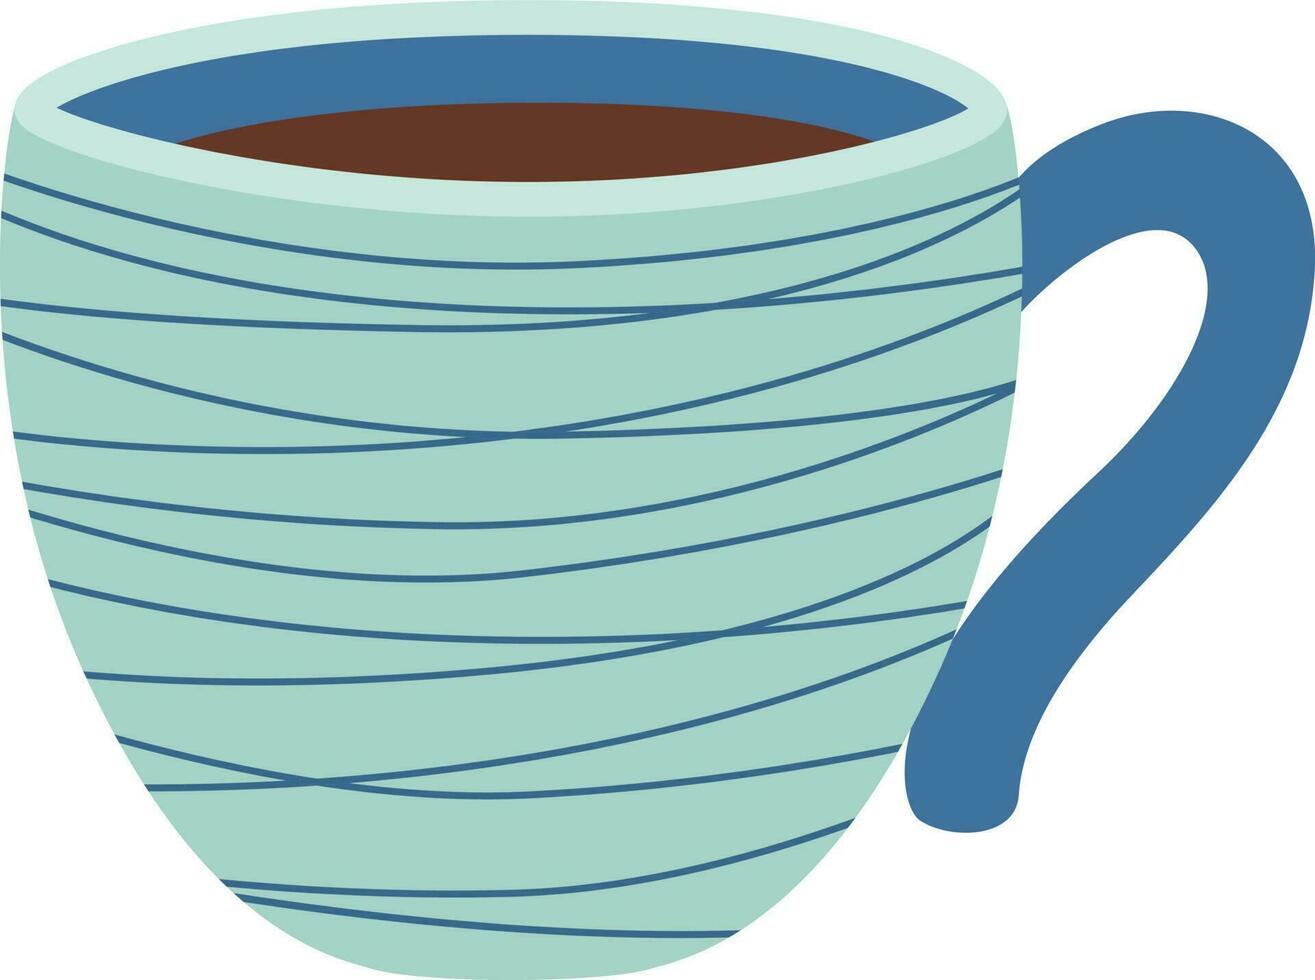 Cup cartoon illustration vector